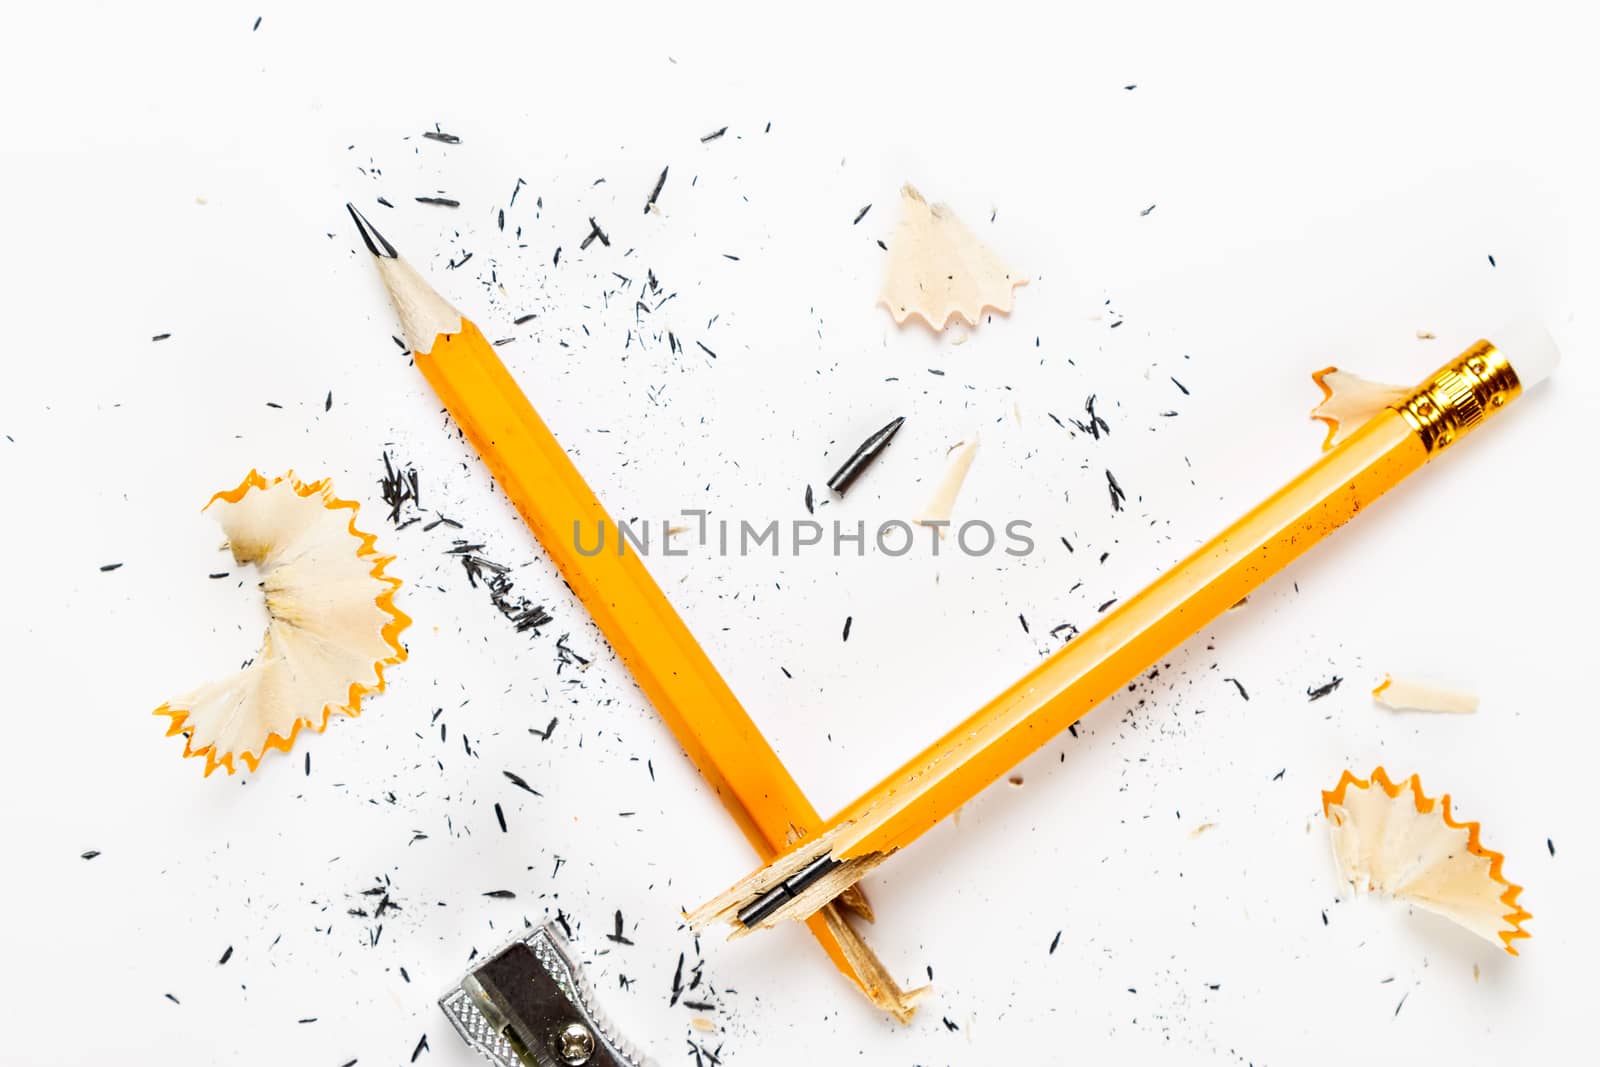 Pencil, metal sharpener and pencil shavings on white background. Horizontal image.